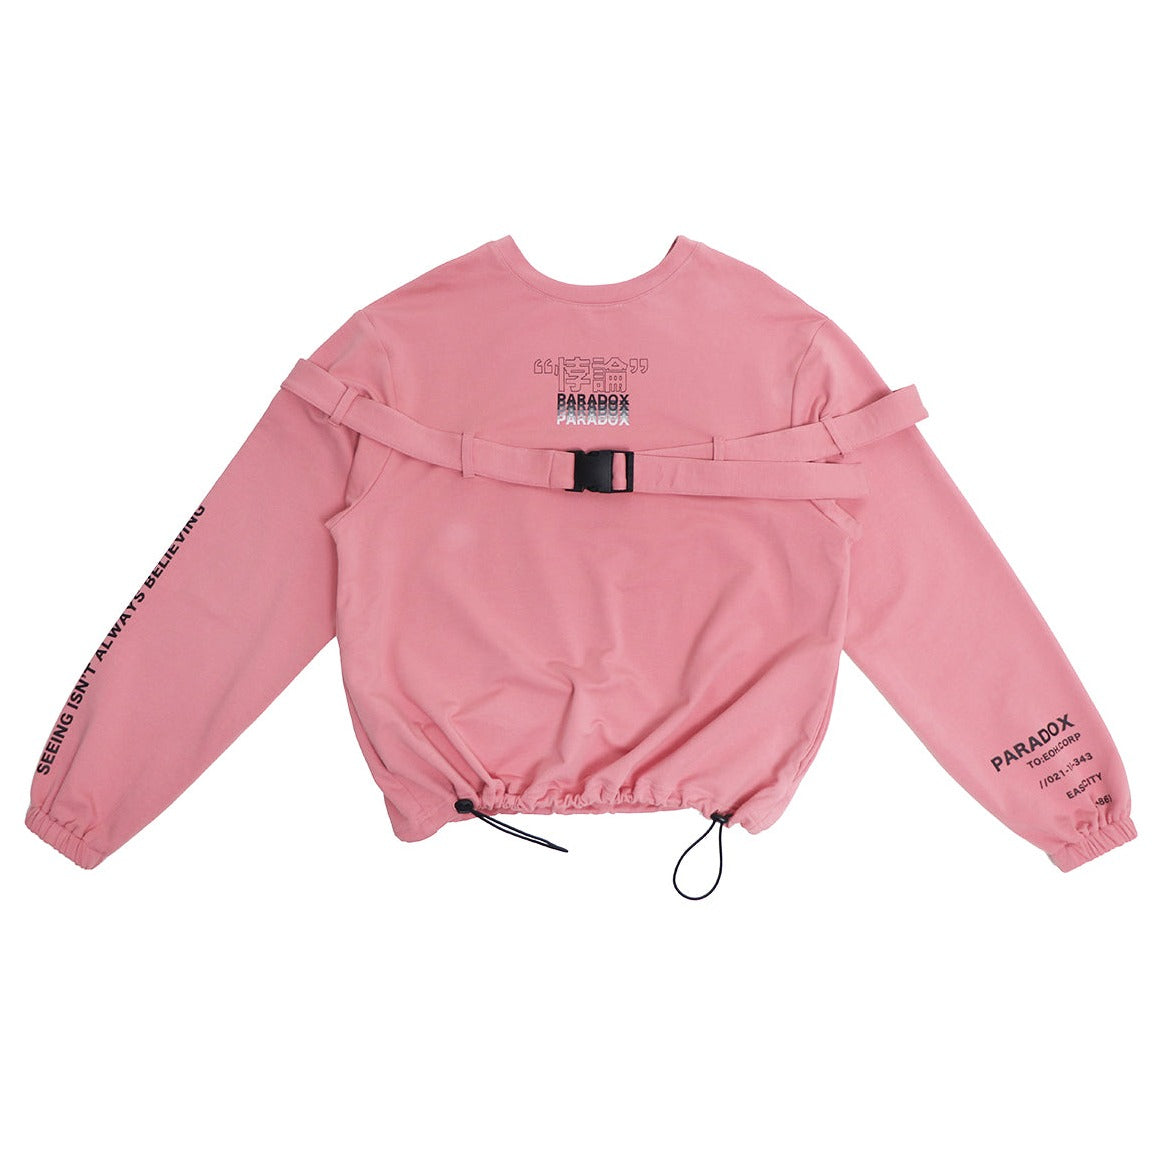 Paradox Leash Sweatshirt - Pink / One size - Windbreaker